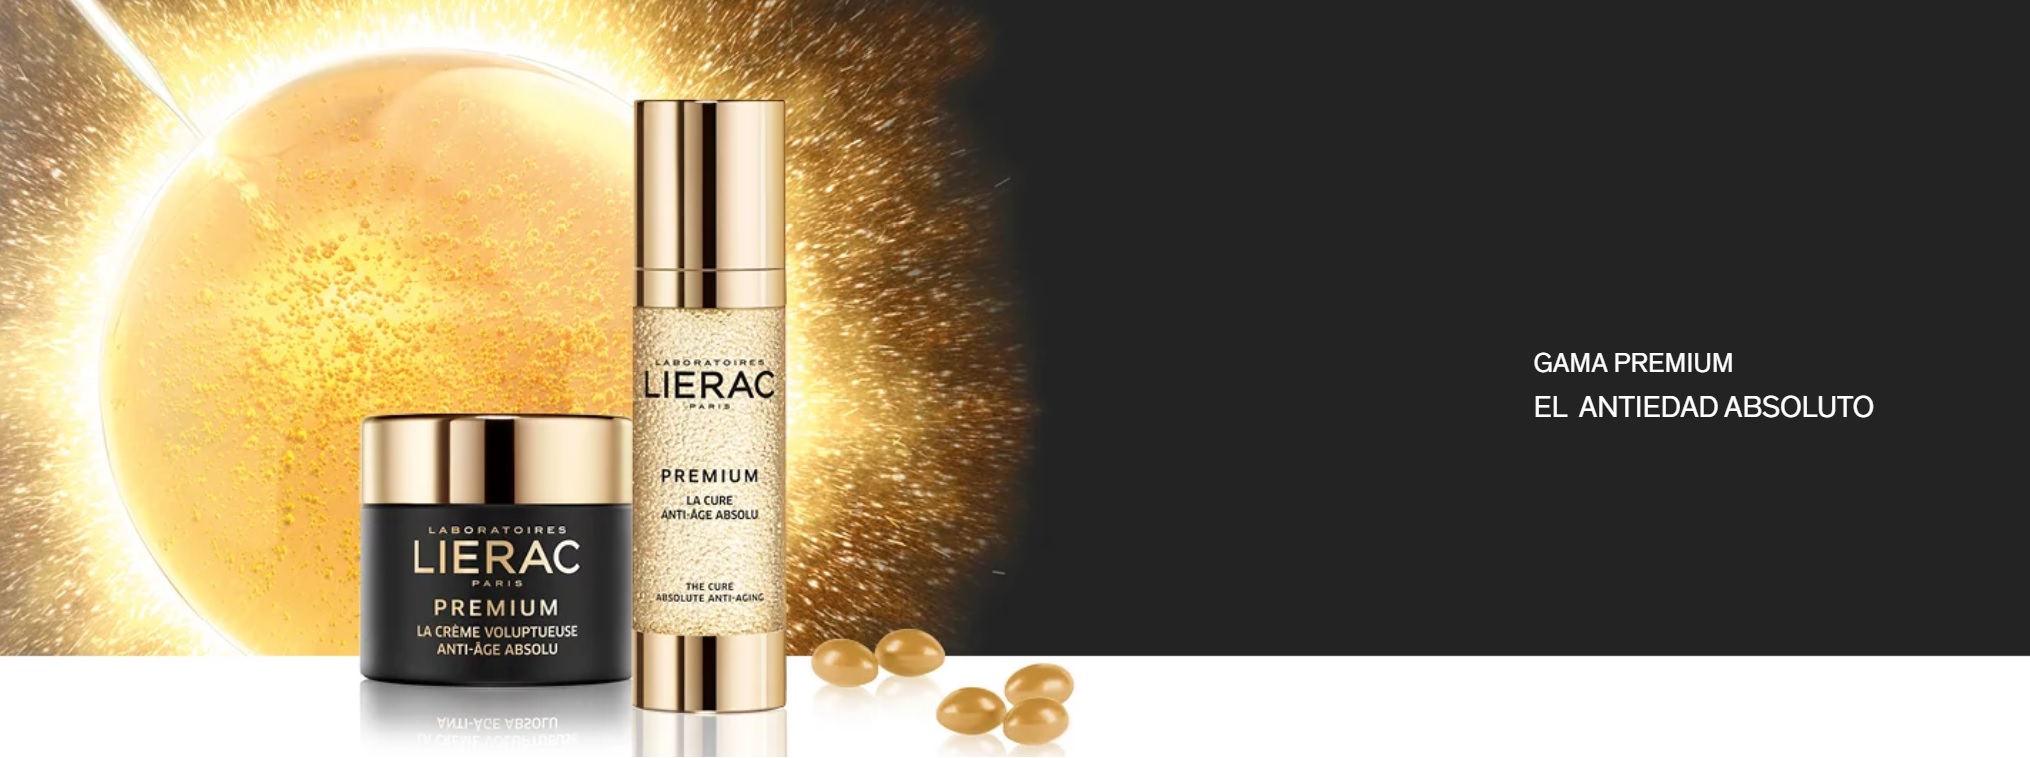 Lierac Premium range of products on Farma2go